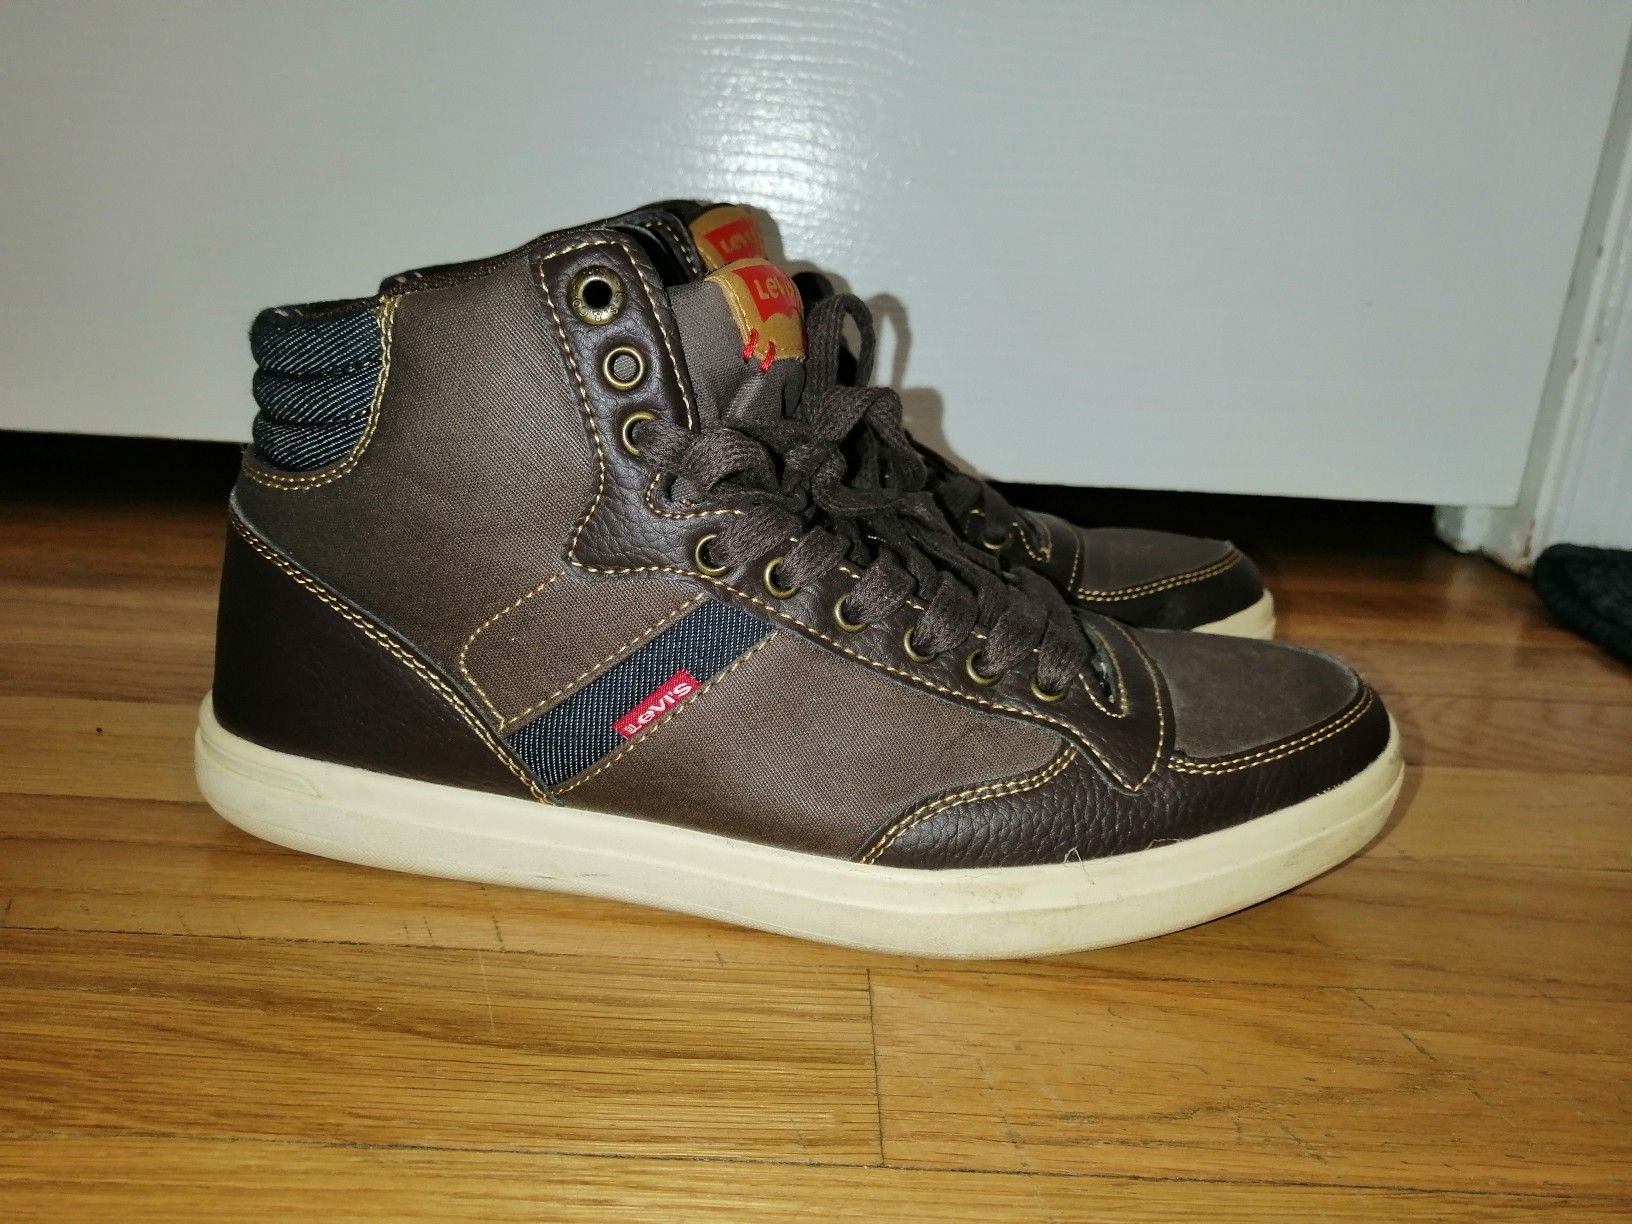 Levis sneaker boots size 9